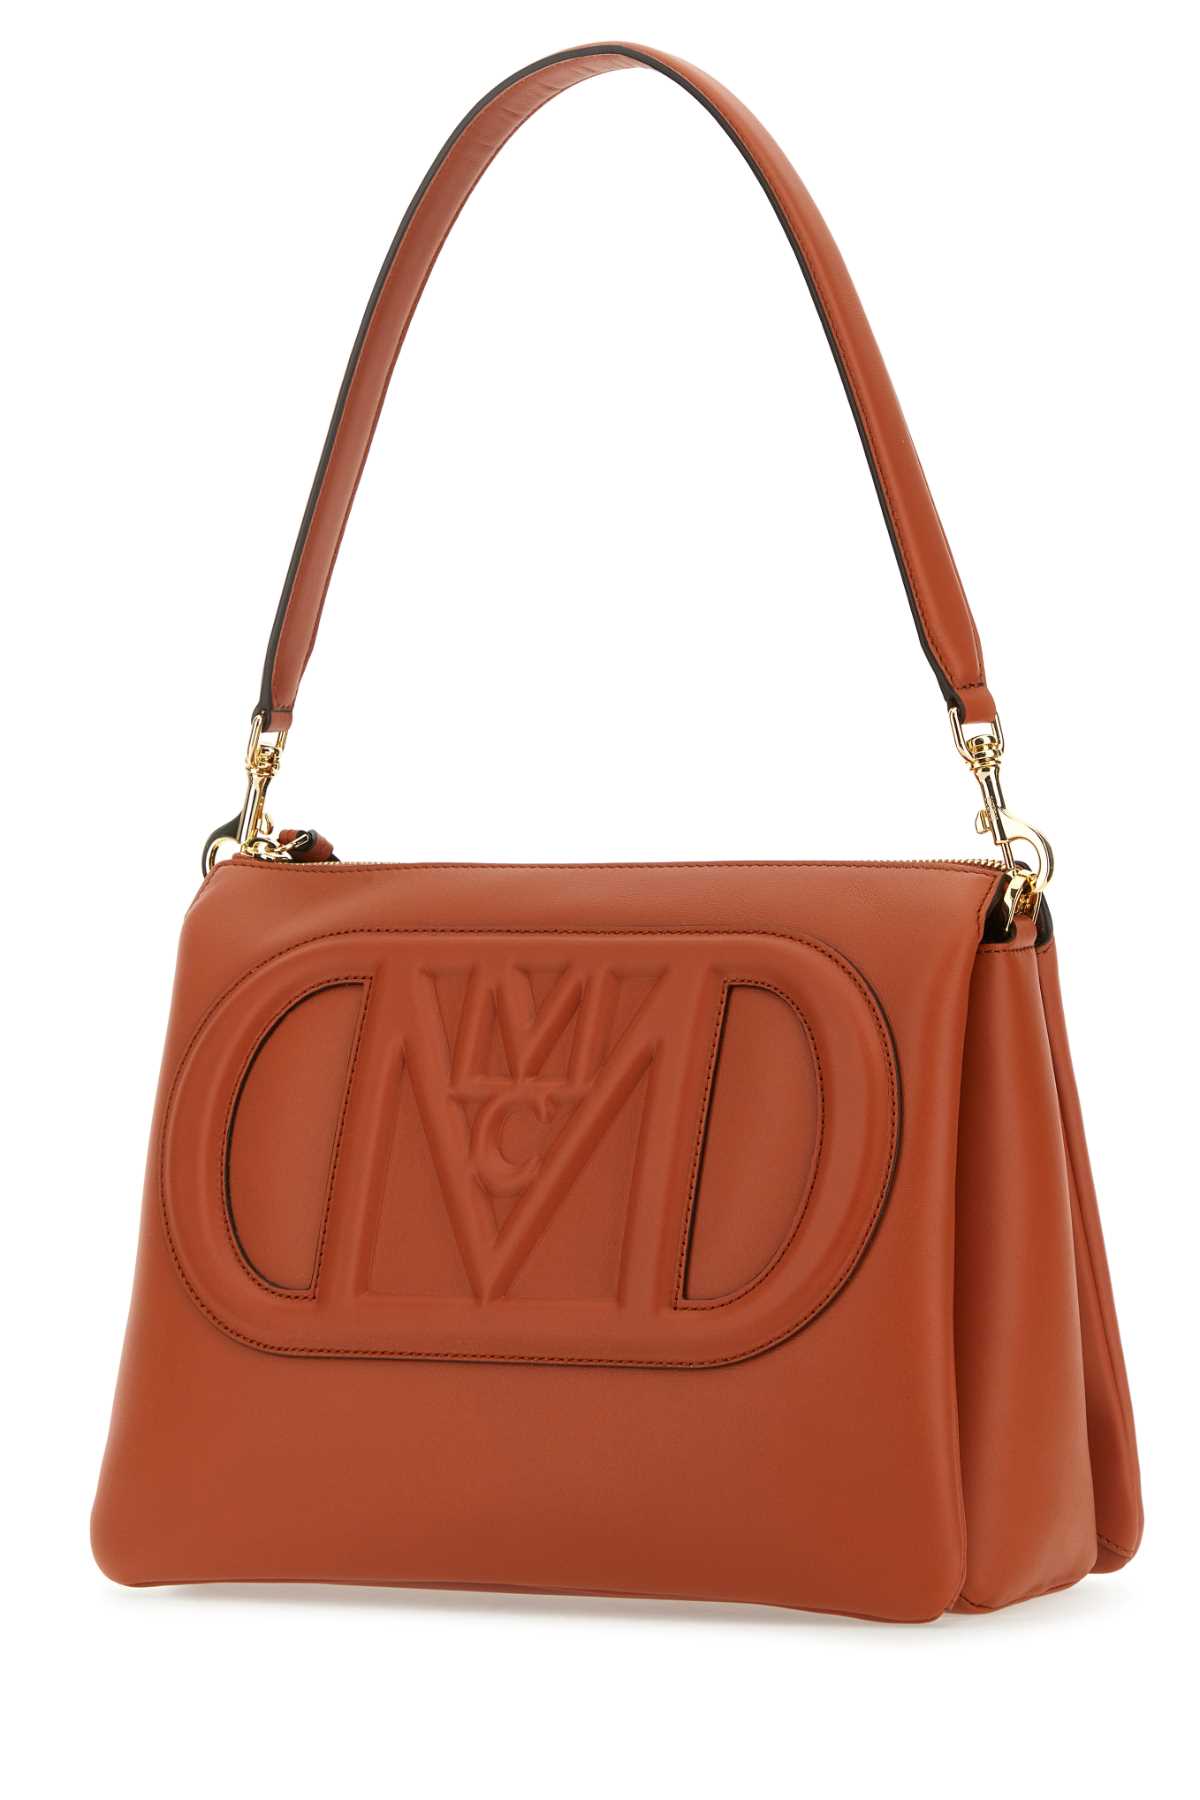 Mcm Brick Leather Mode Travia Medium Shoulder Bag In Bombay Brown